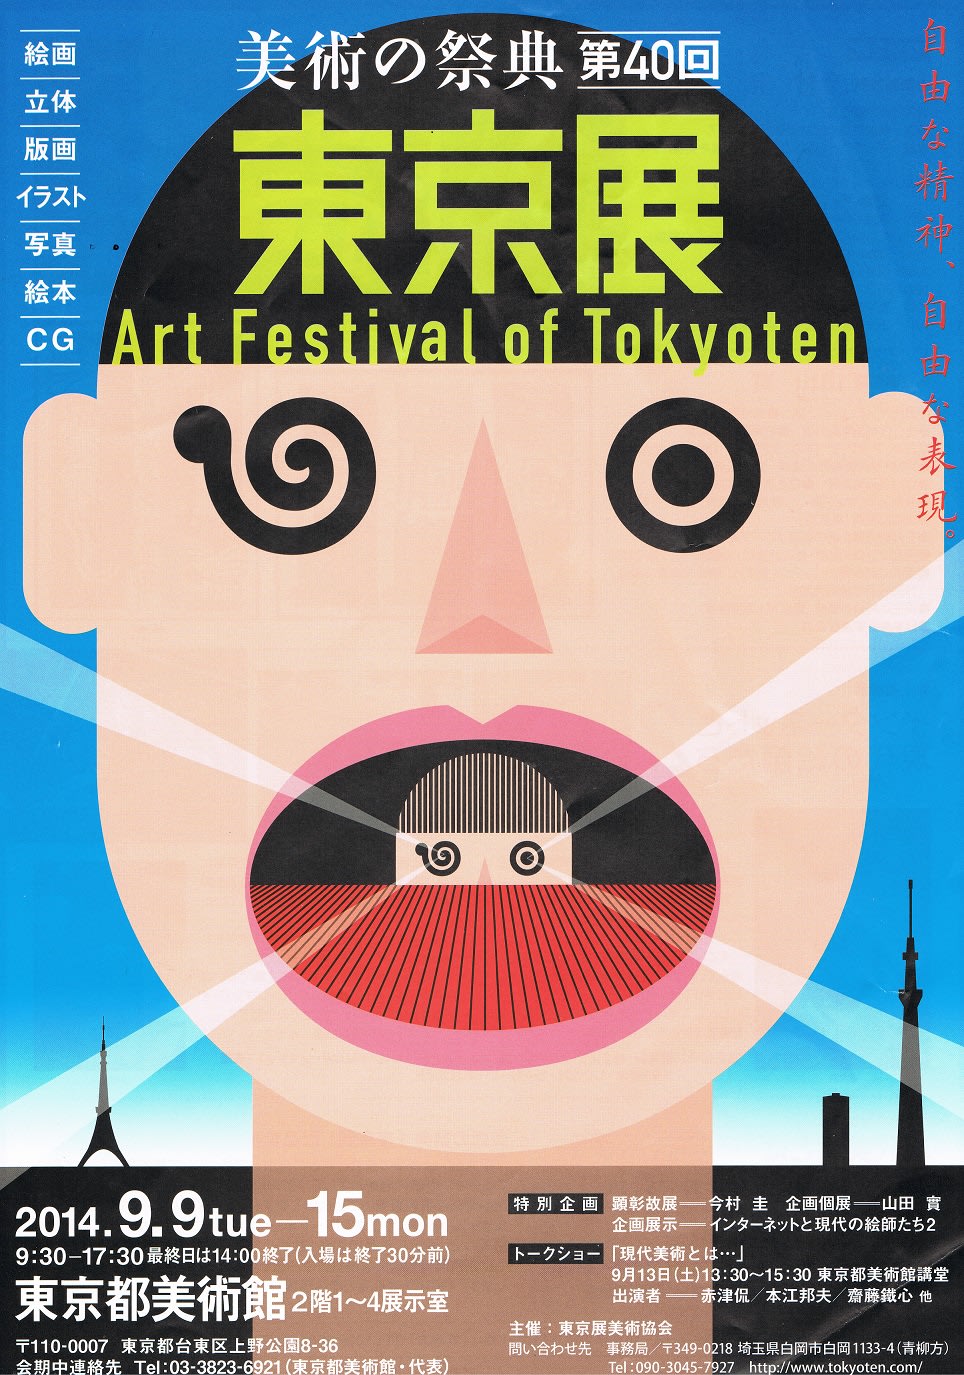 美術 の 祭典 東京 展